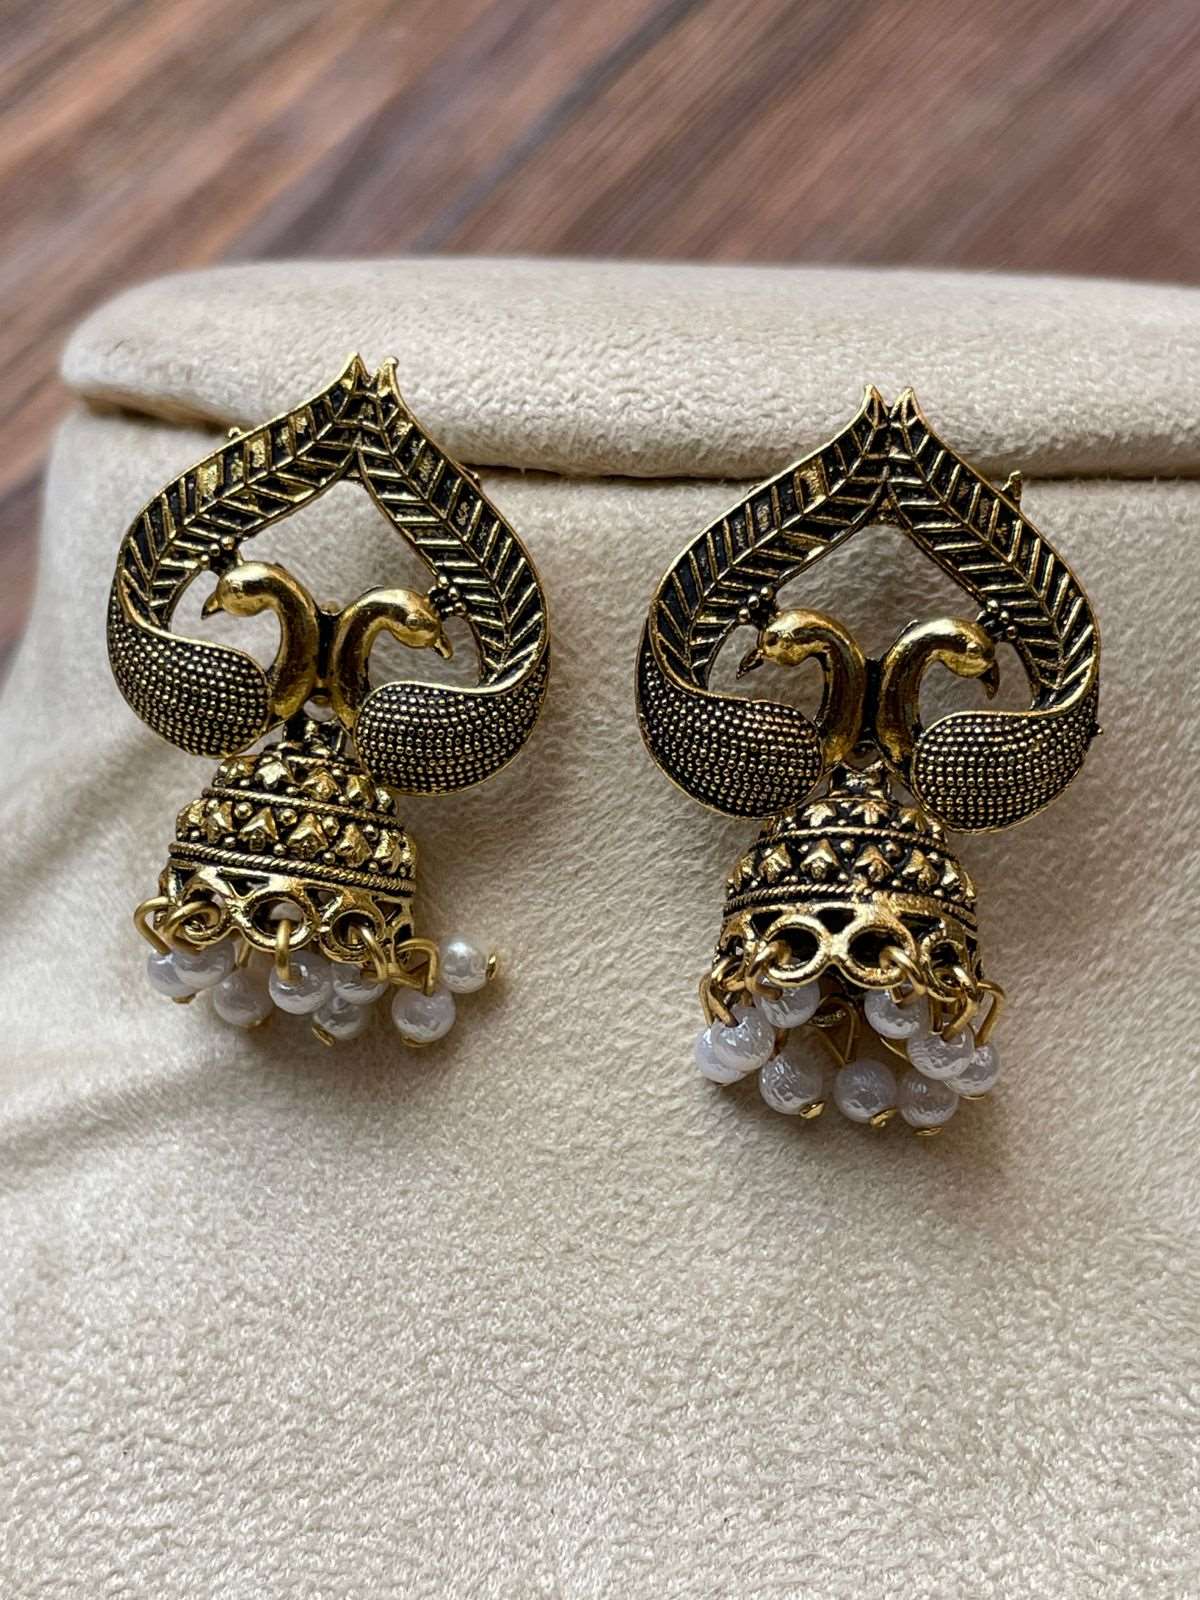 Antique Peacock Necklace - Abdesignsjewellery